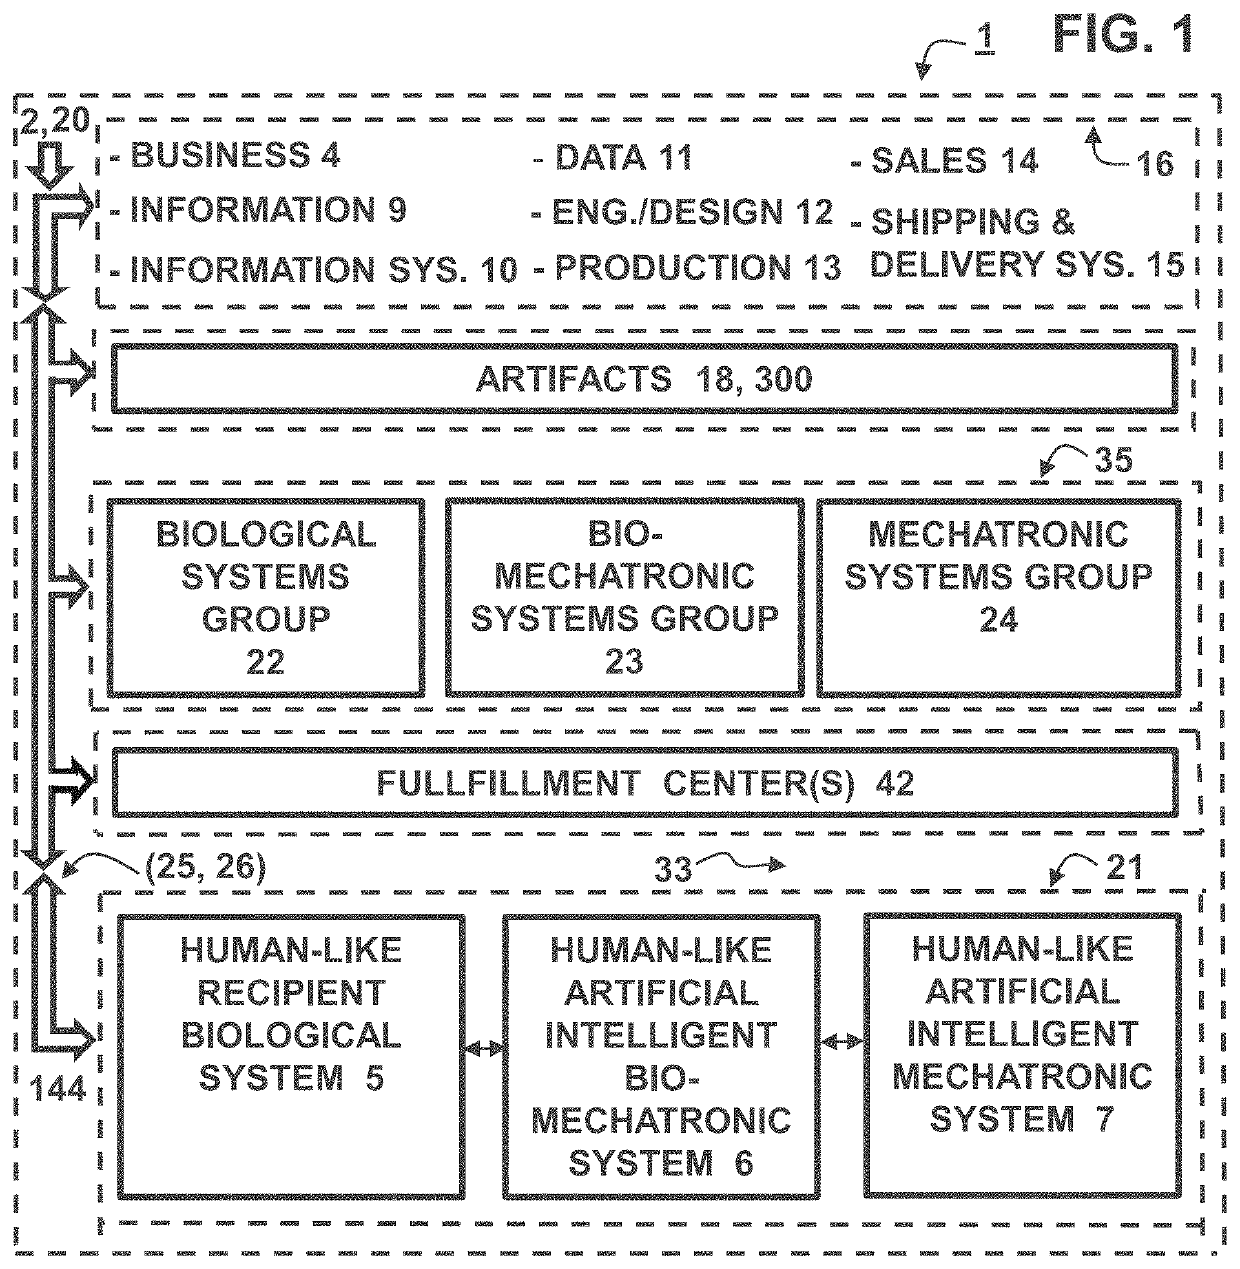 Human-like emulation enterprise system and method